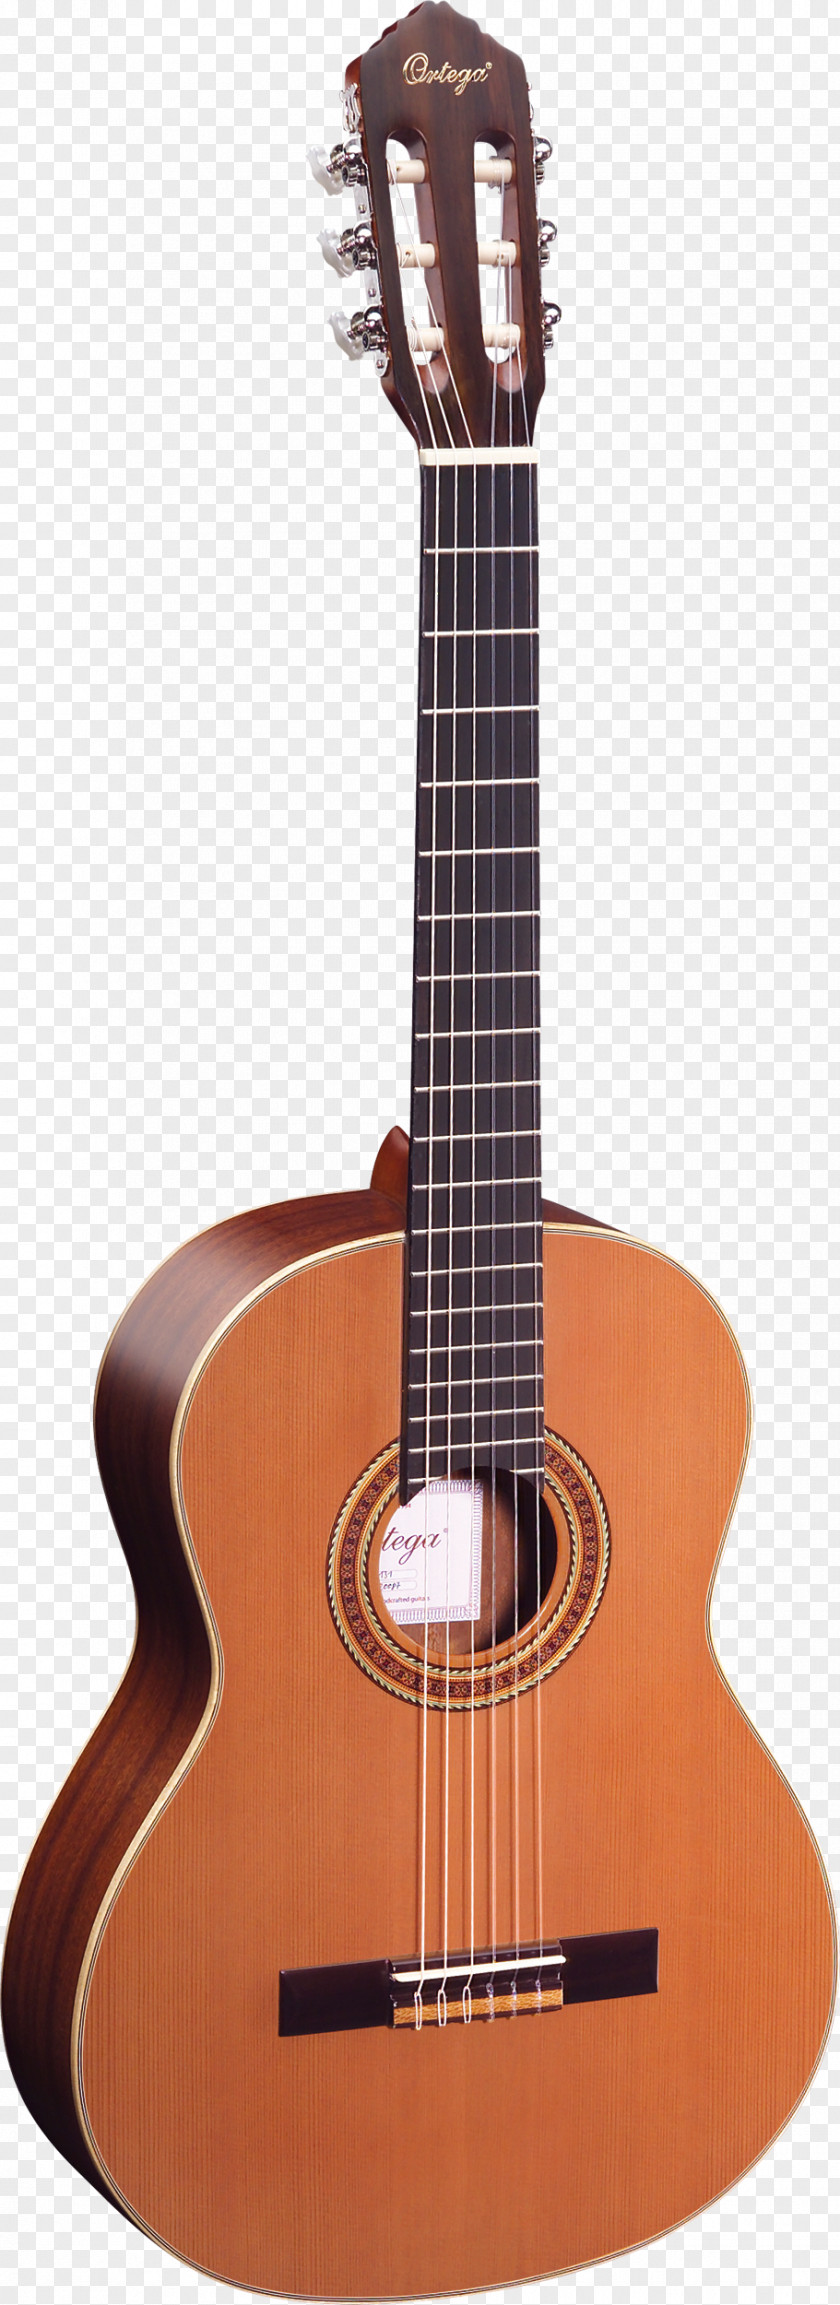 Amancio Ortega Fender Bullet Steel-string Acoustic Guitar Classical Musical Instruments PNG